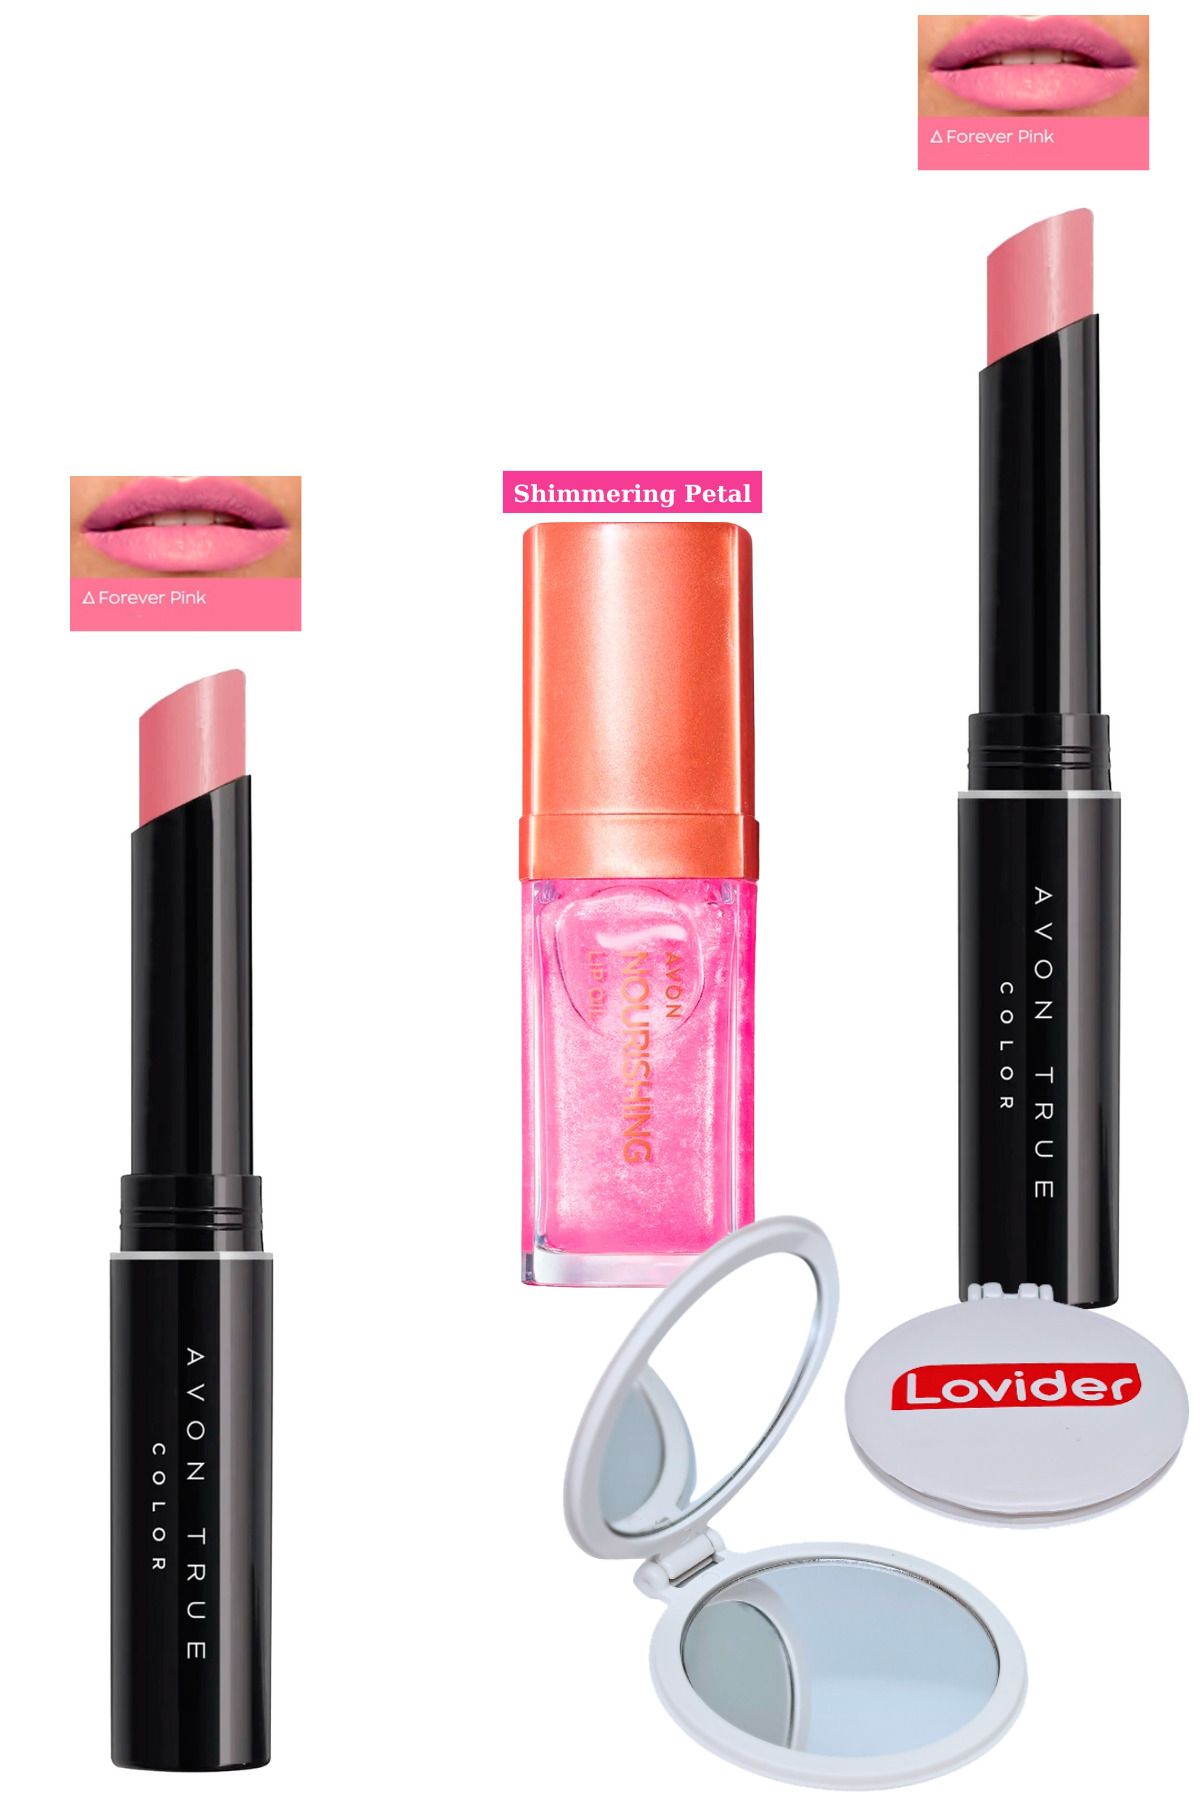 Avon Ultra Beauty Ruj Forever Pink 2'li + Shimmering Petal Dudak Bakım Yağı + Lovider Cep Aynası